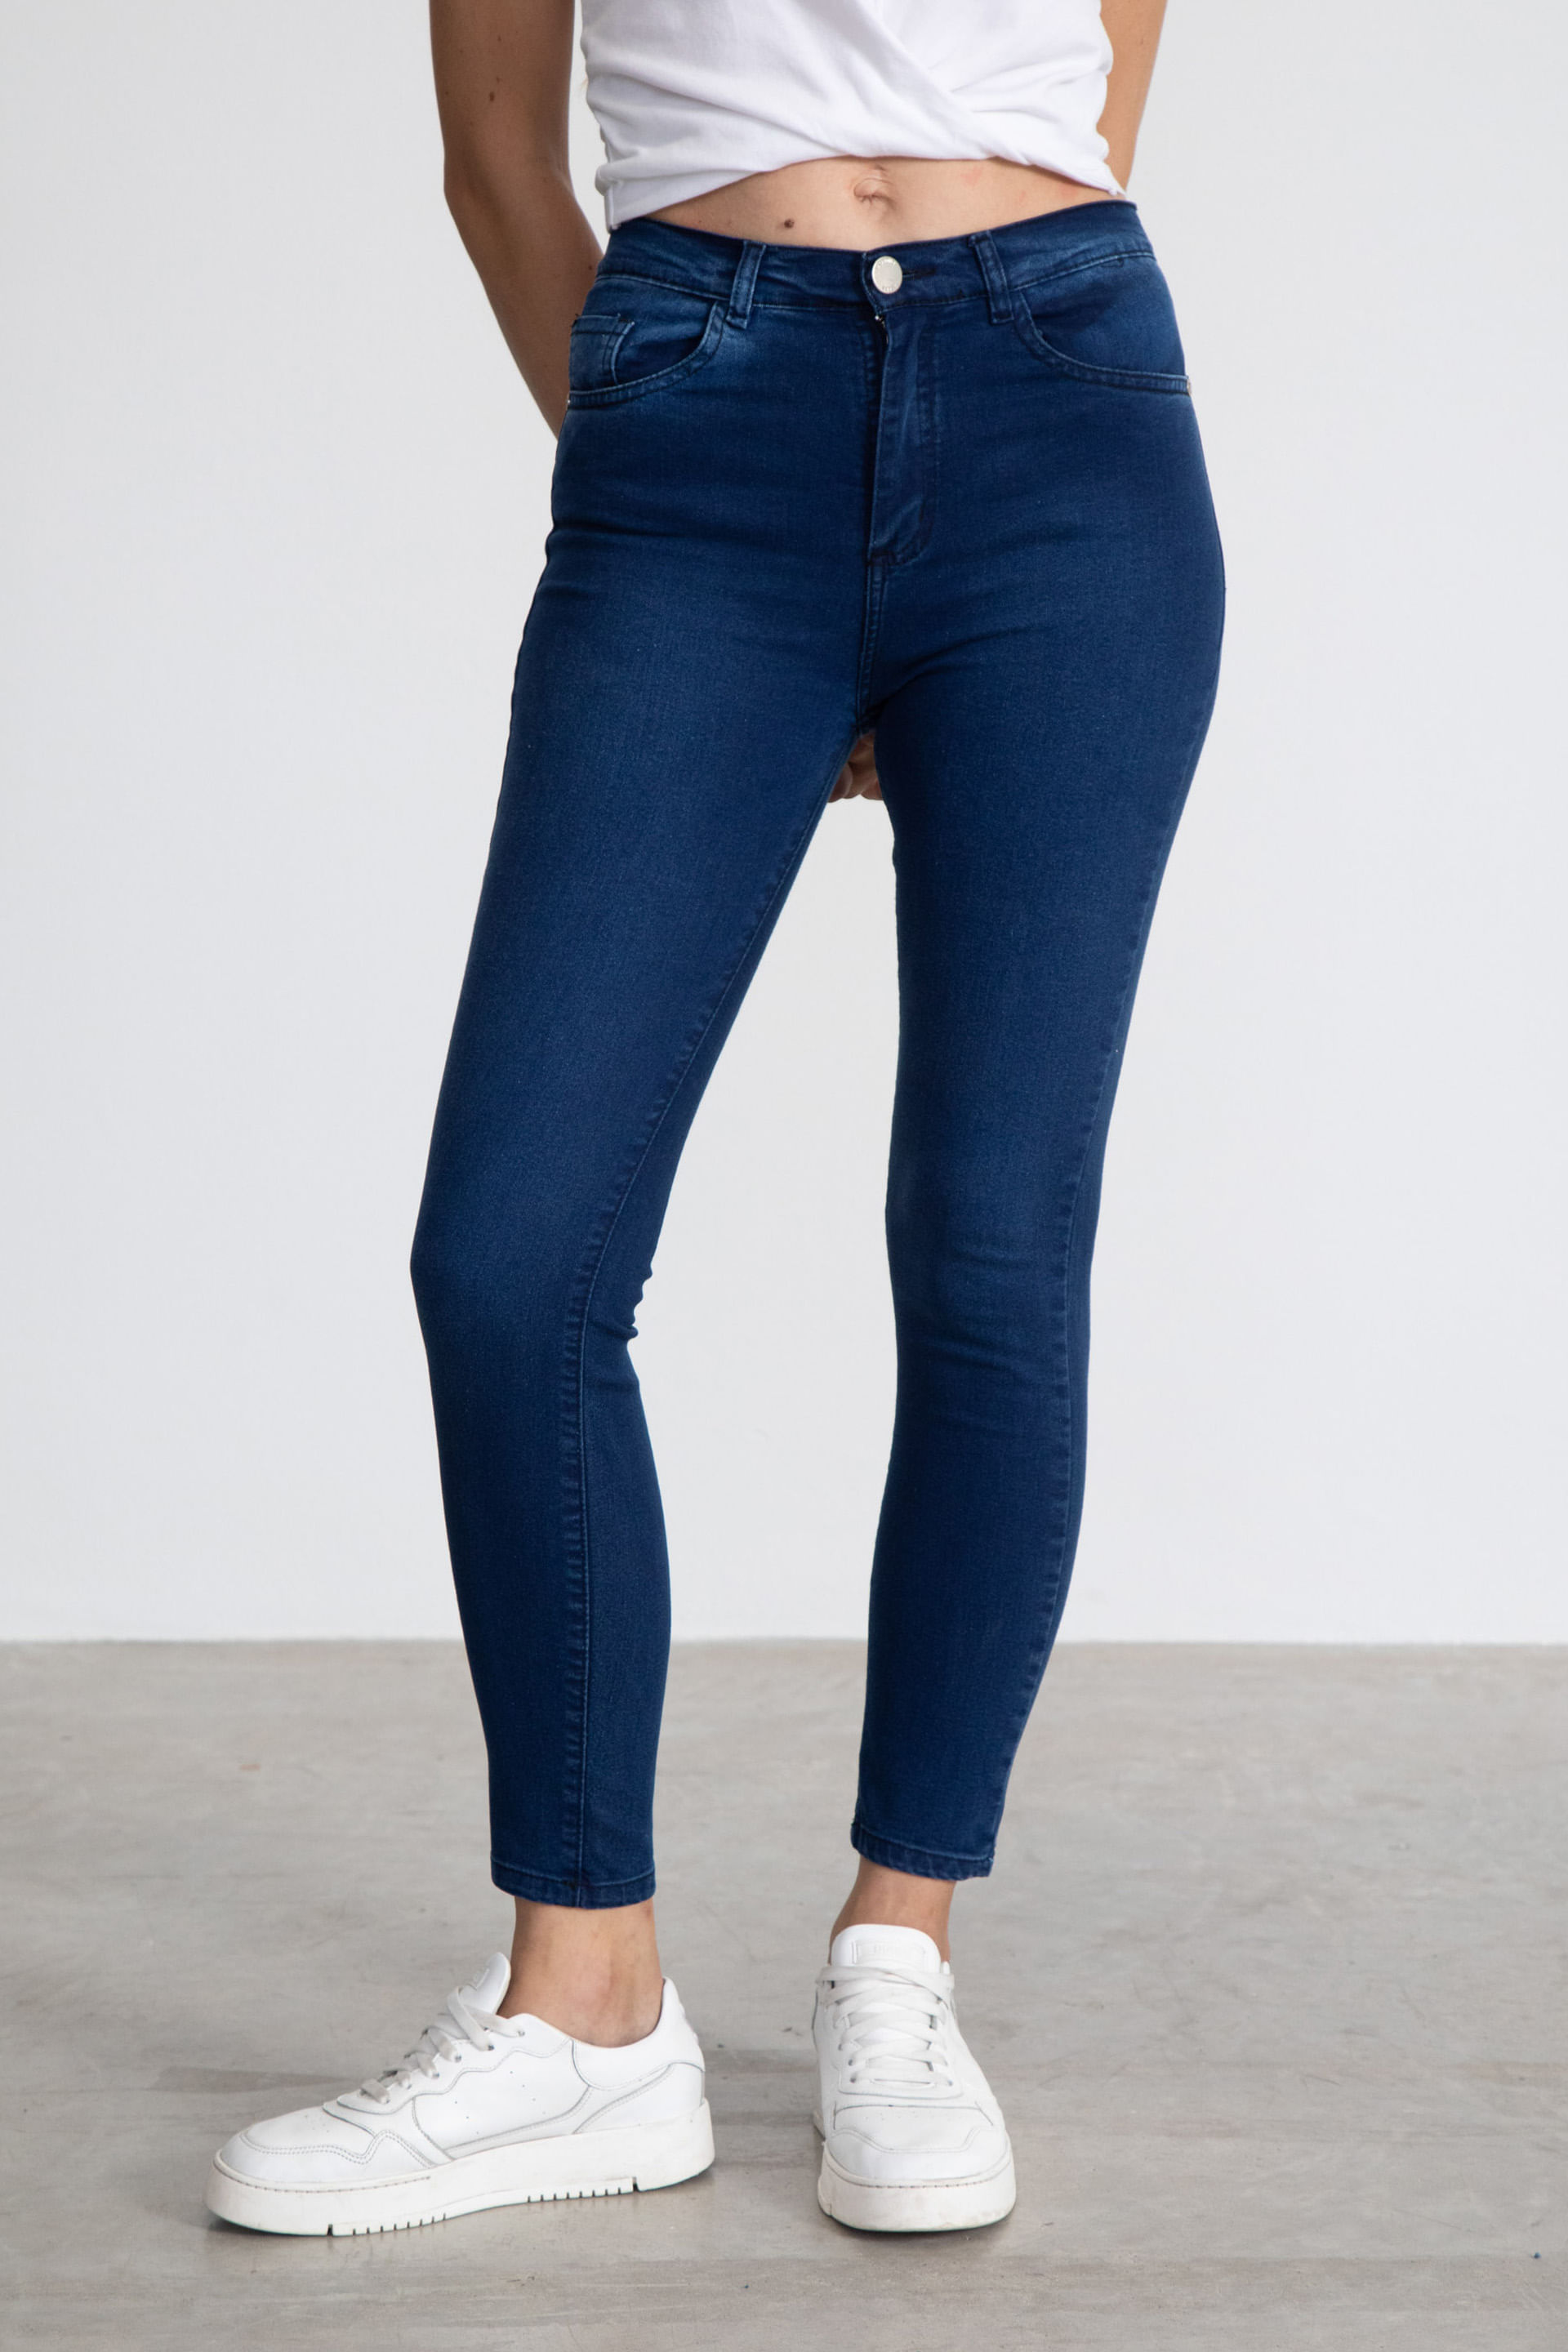 Azul Marino - 26 - Jeans de Mujer - Yagmour